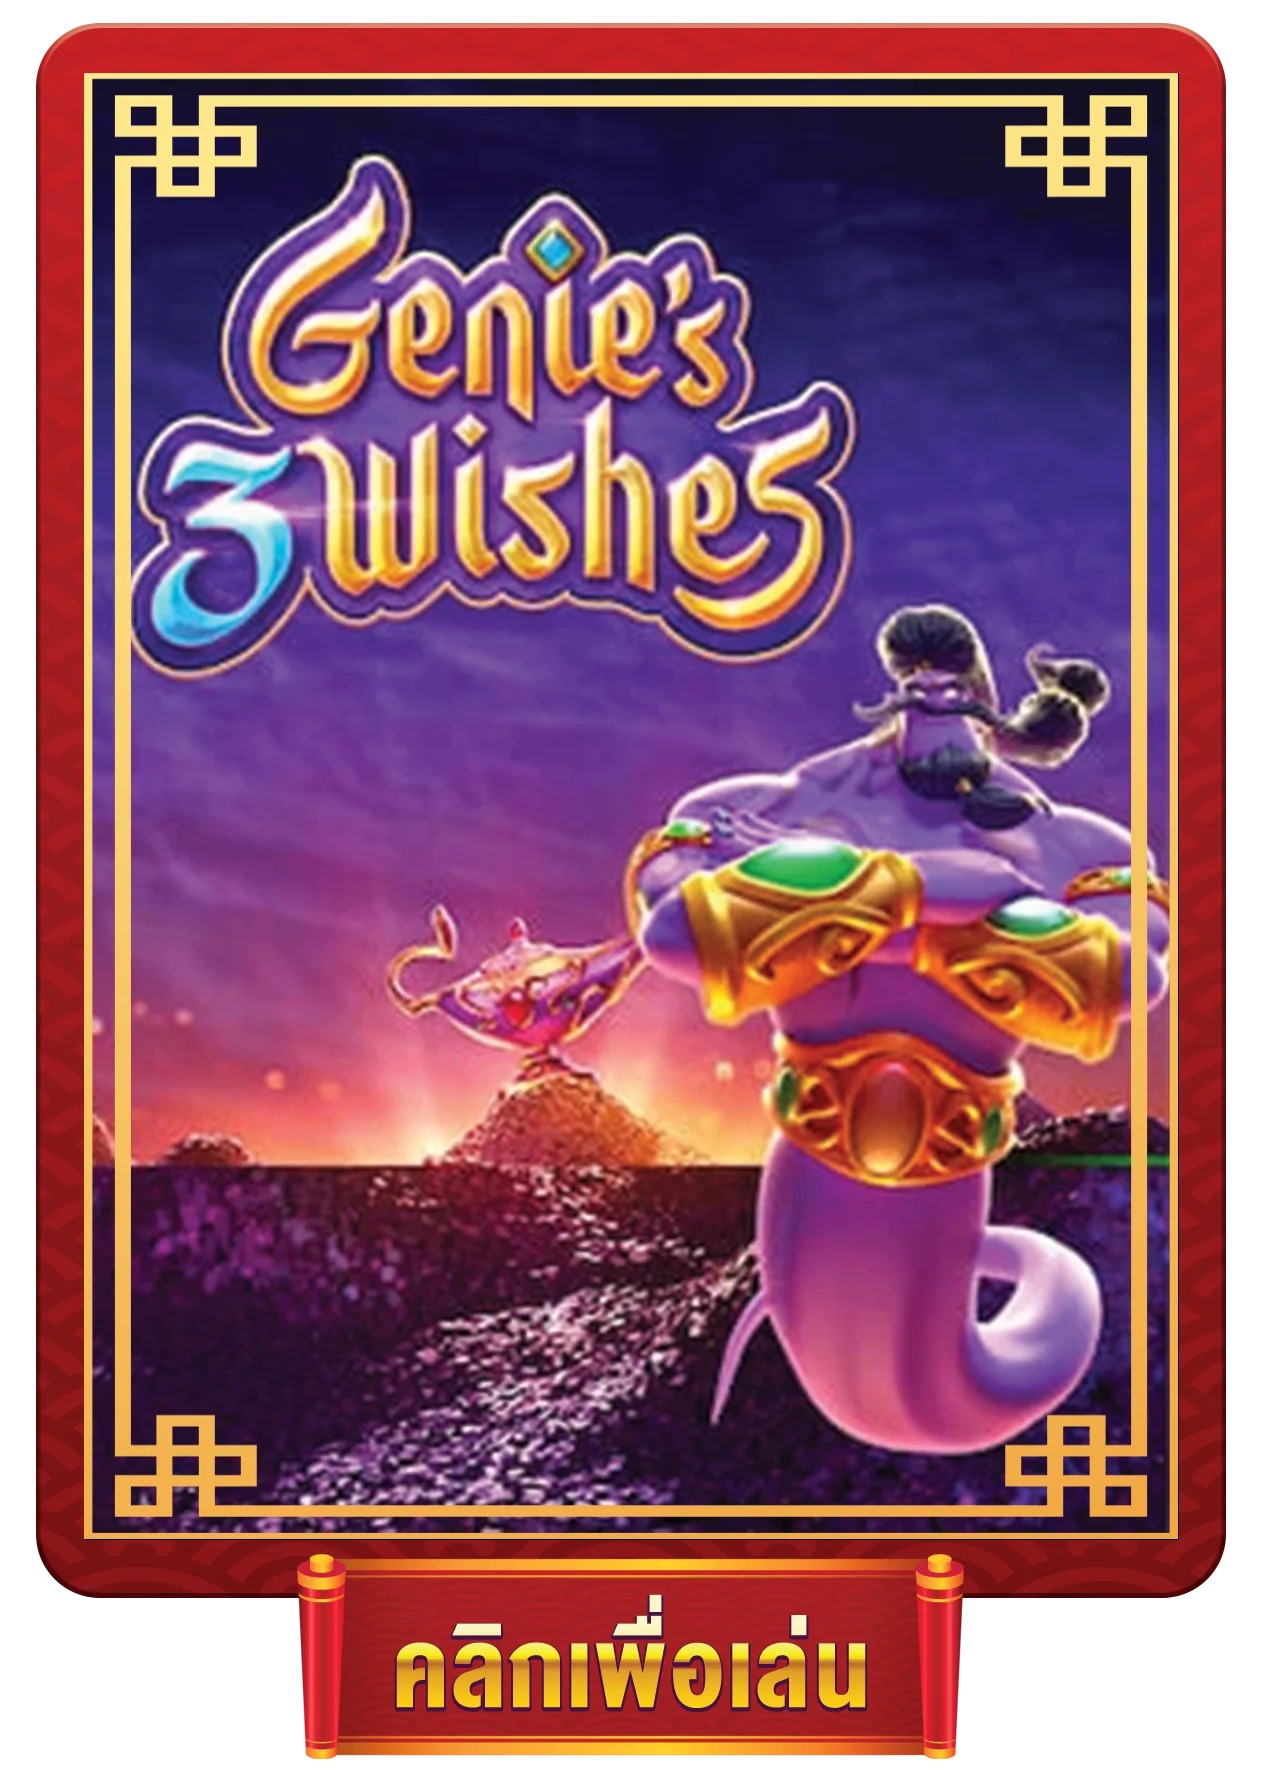 genies-3-wishes